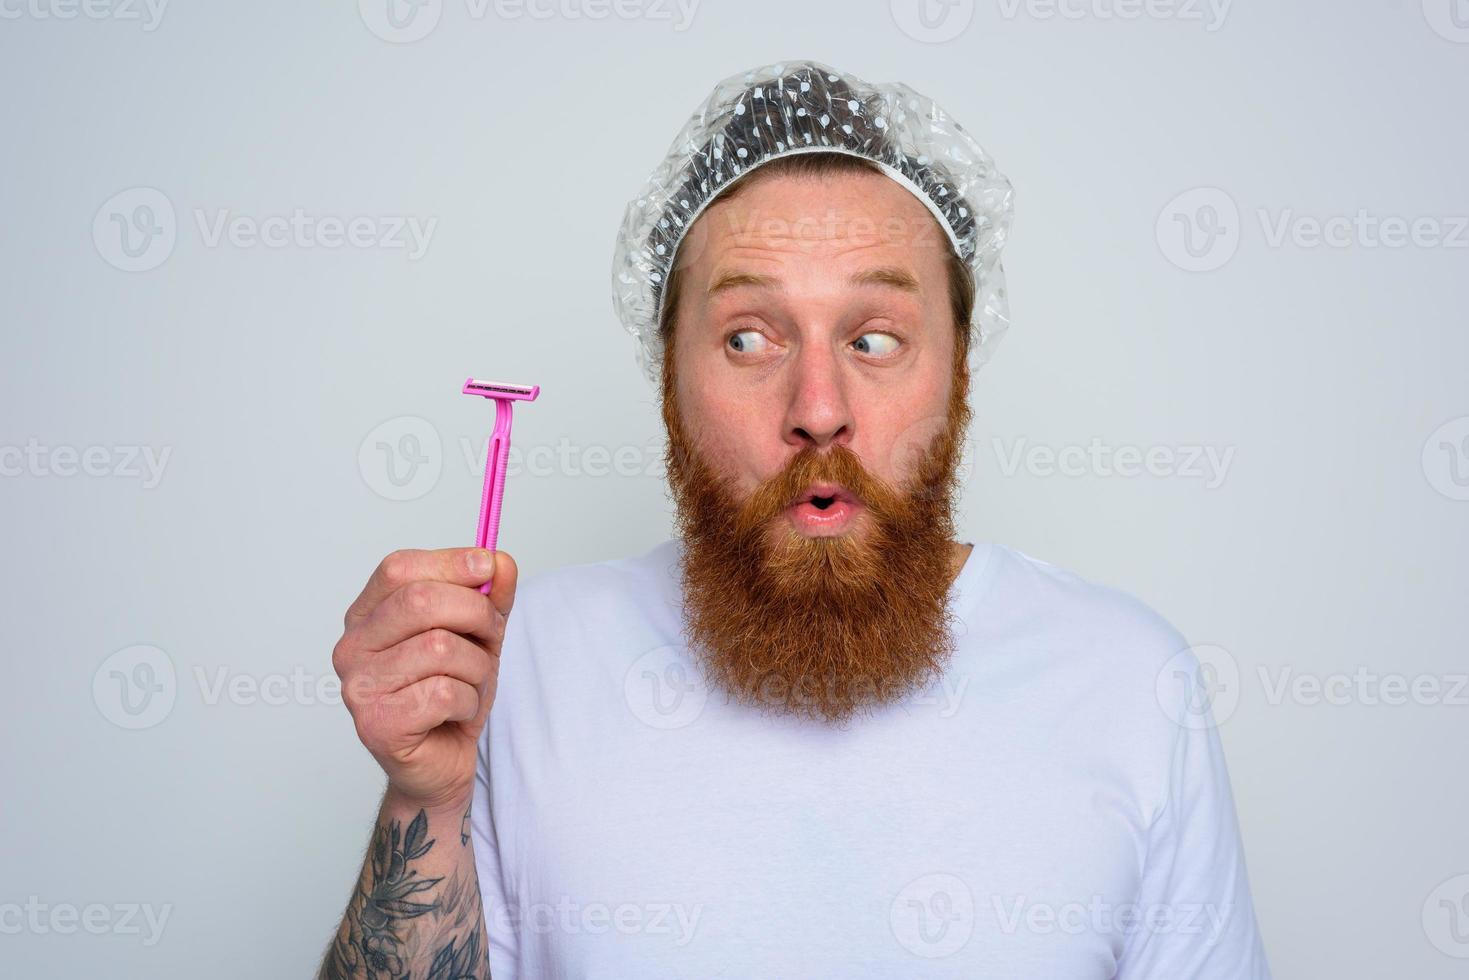 wondered man adjust the beard with a razor blade photo